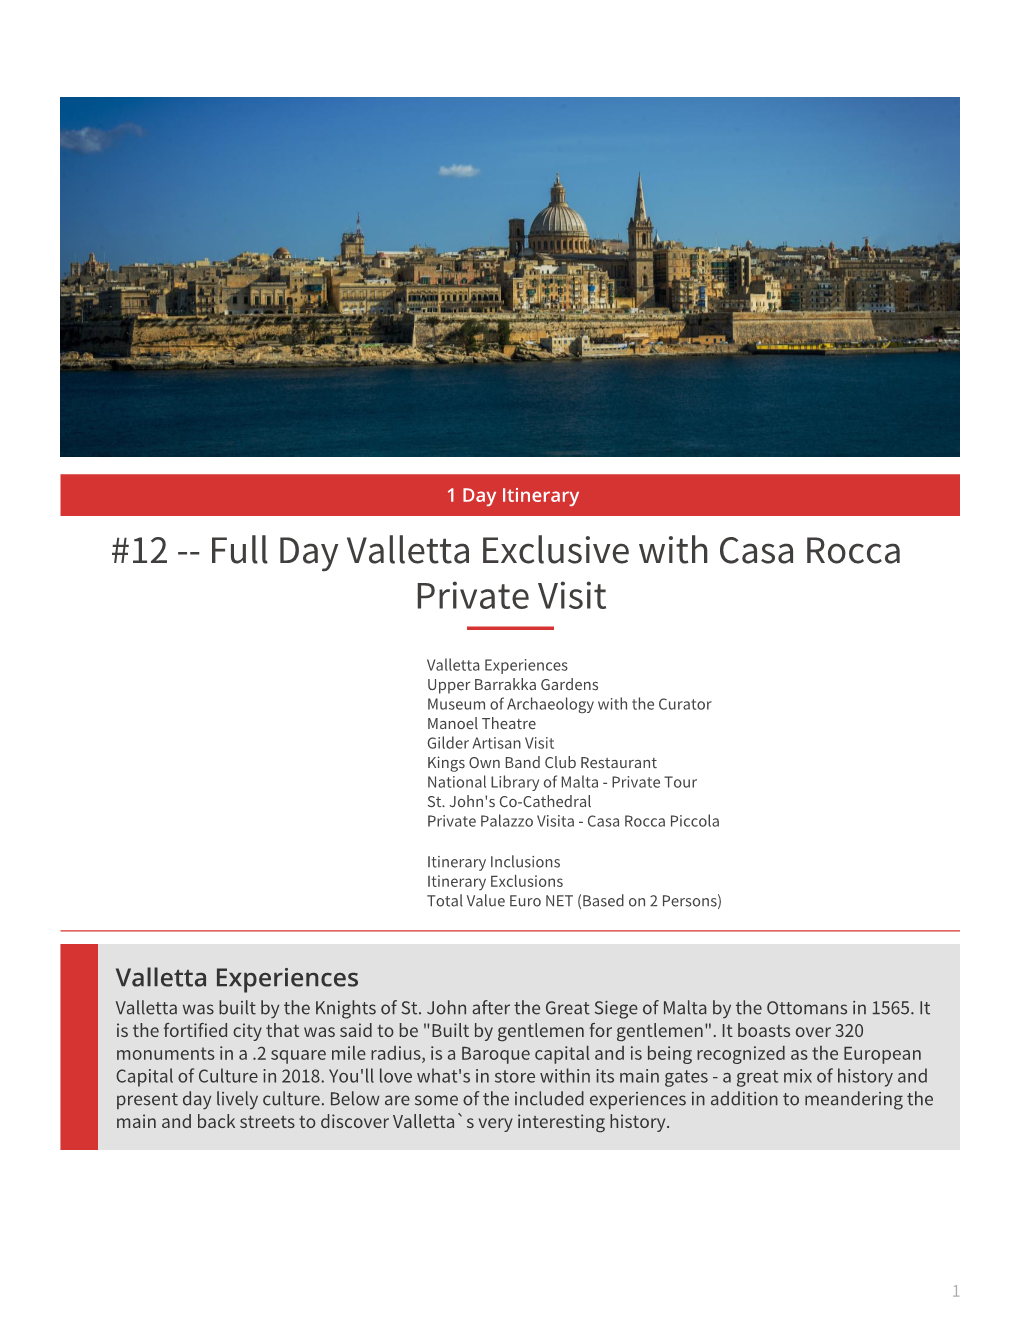 Full Day Valletta Exclusive with Casa Rocca Private Visit